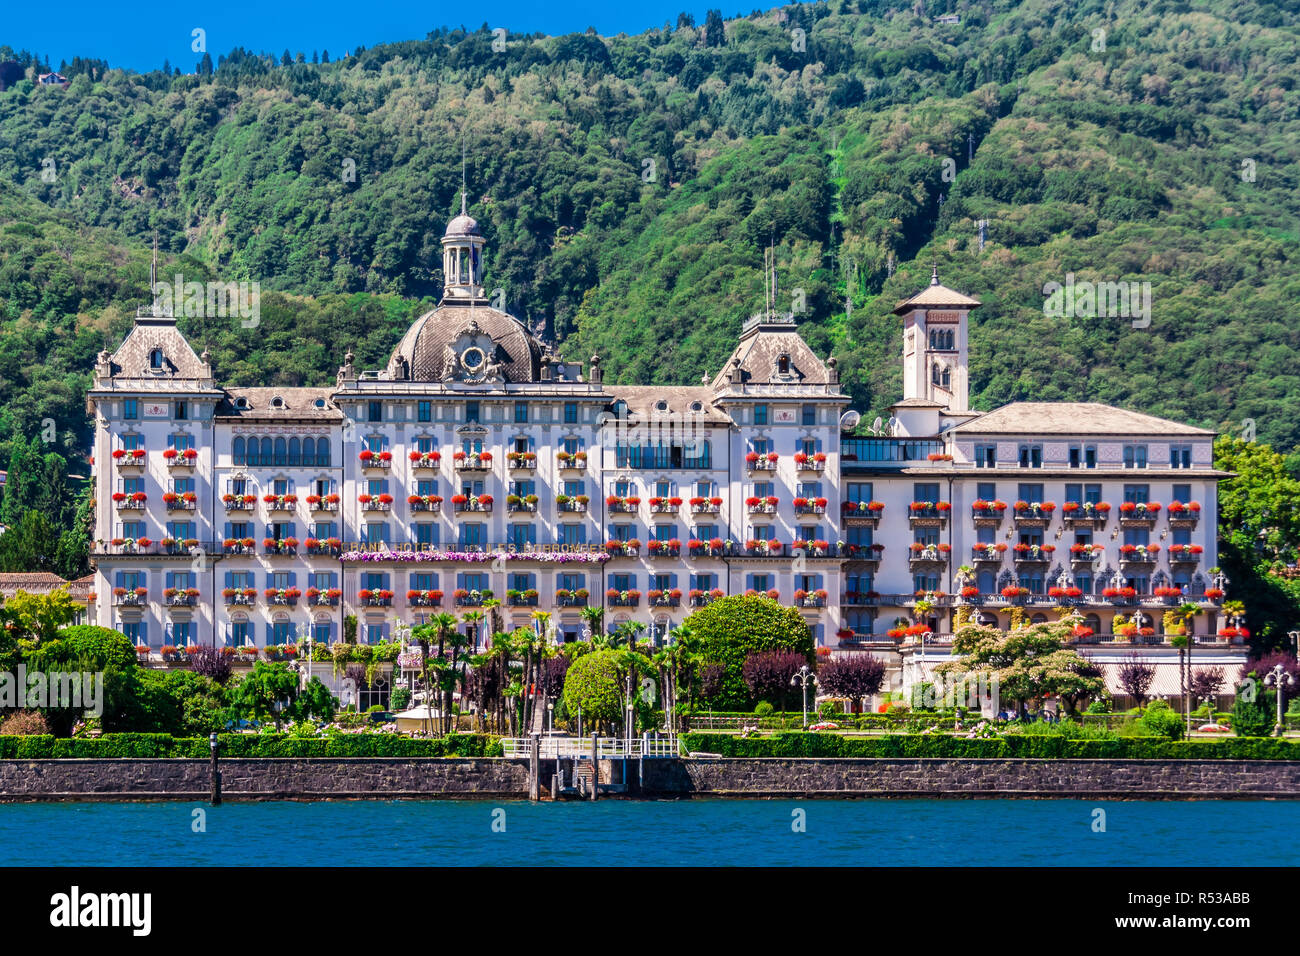 Stresa, Italy, July 12, 2012: Grand Hotel et Les Borromees. A palatial, Art Nouveau hotel overlooking Lake Maggiore. Stock Photo